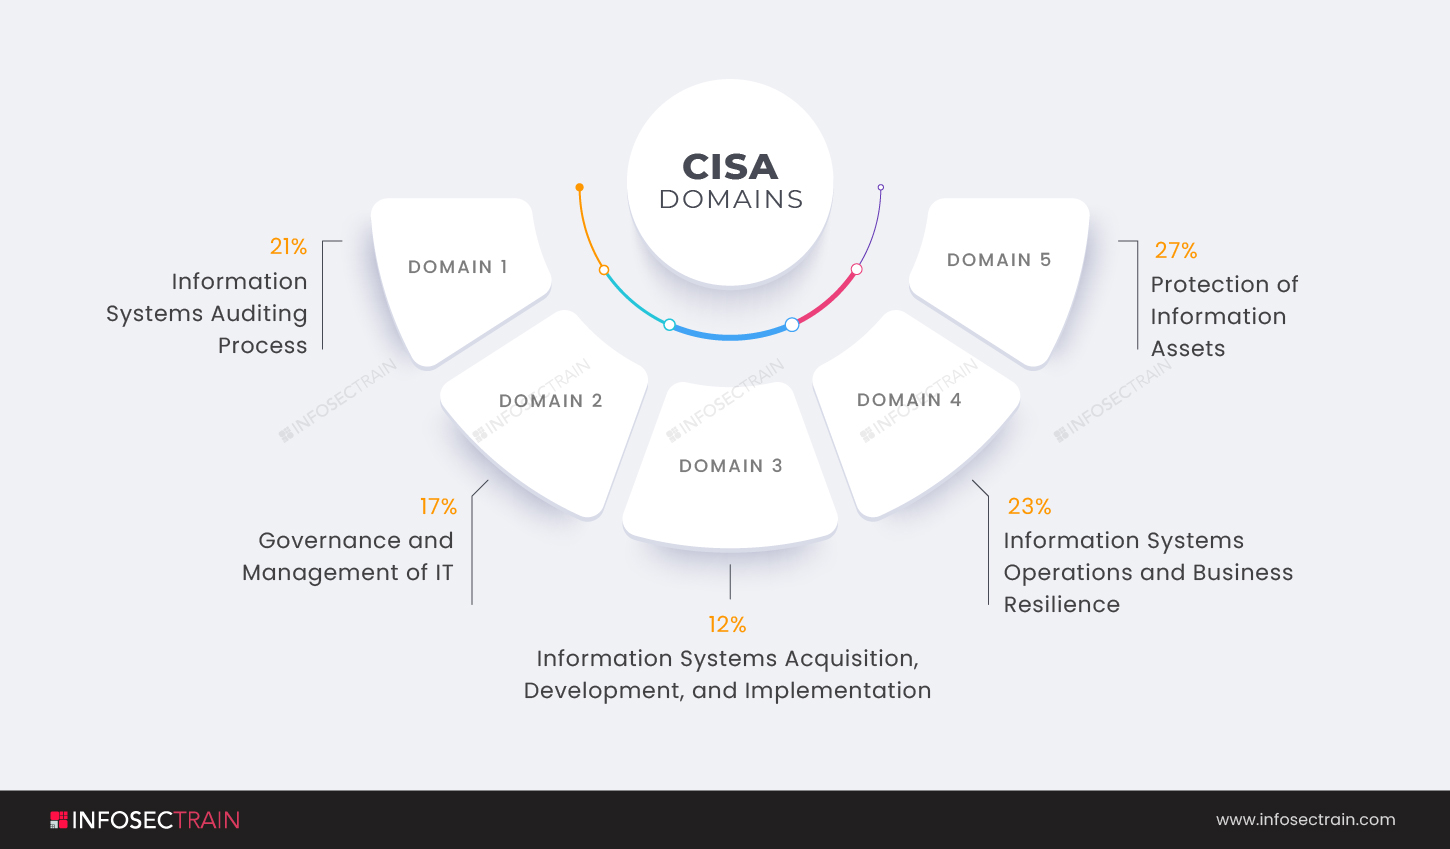 Domains of CISA